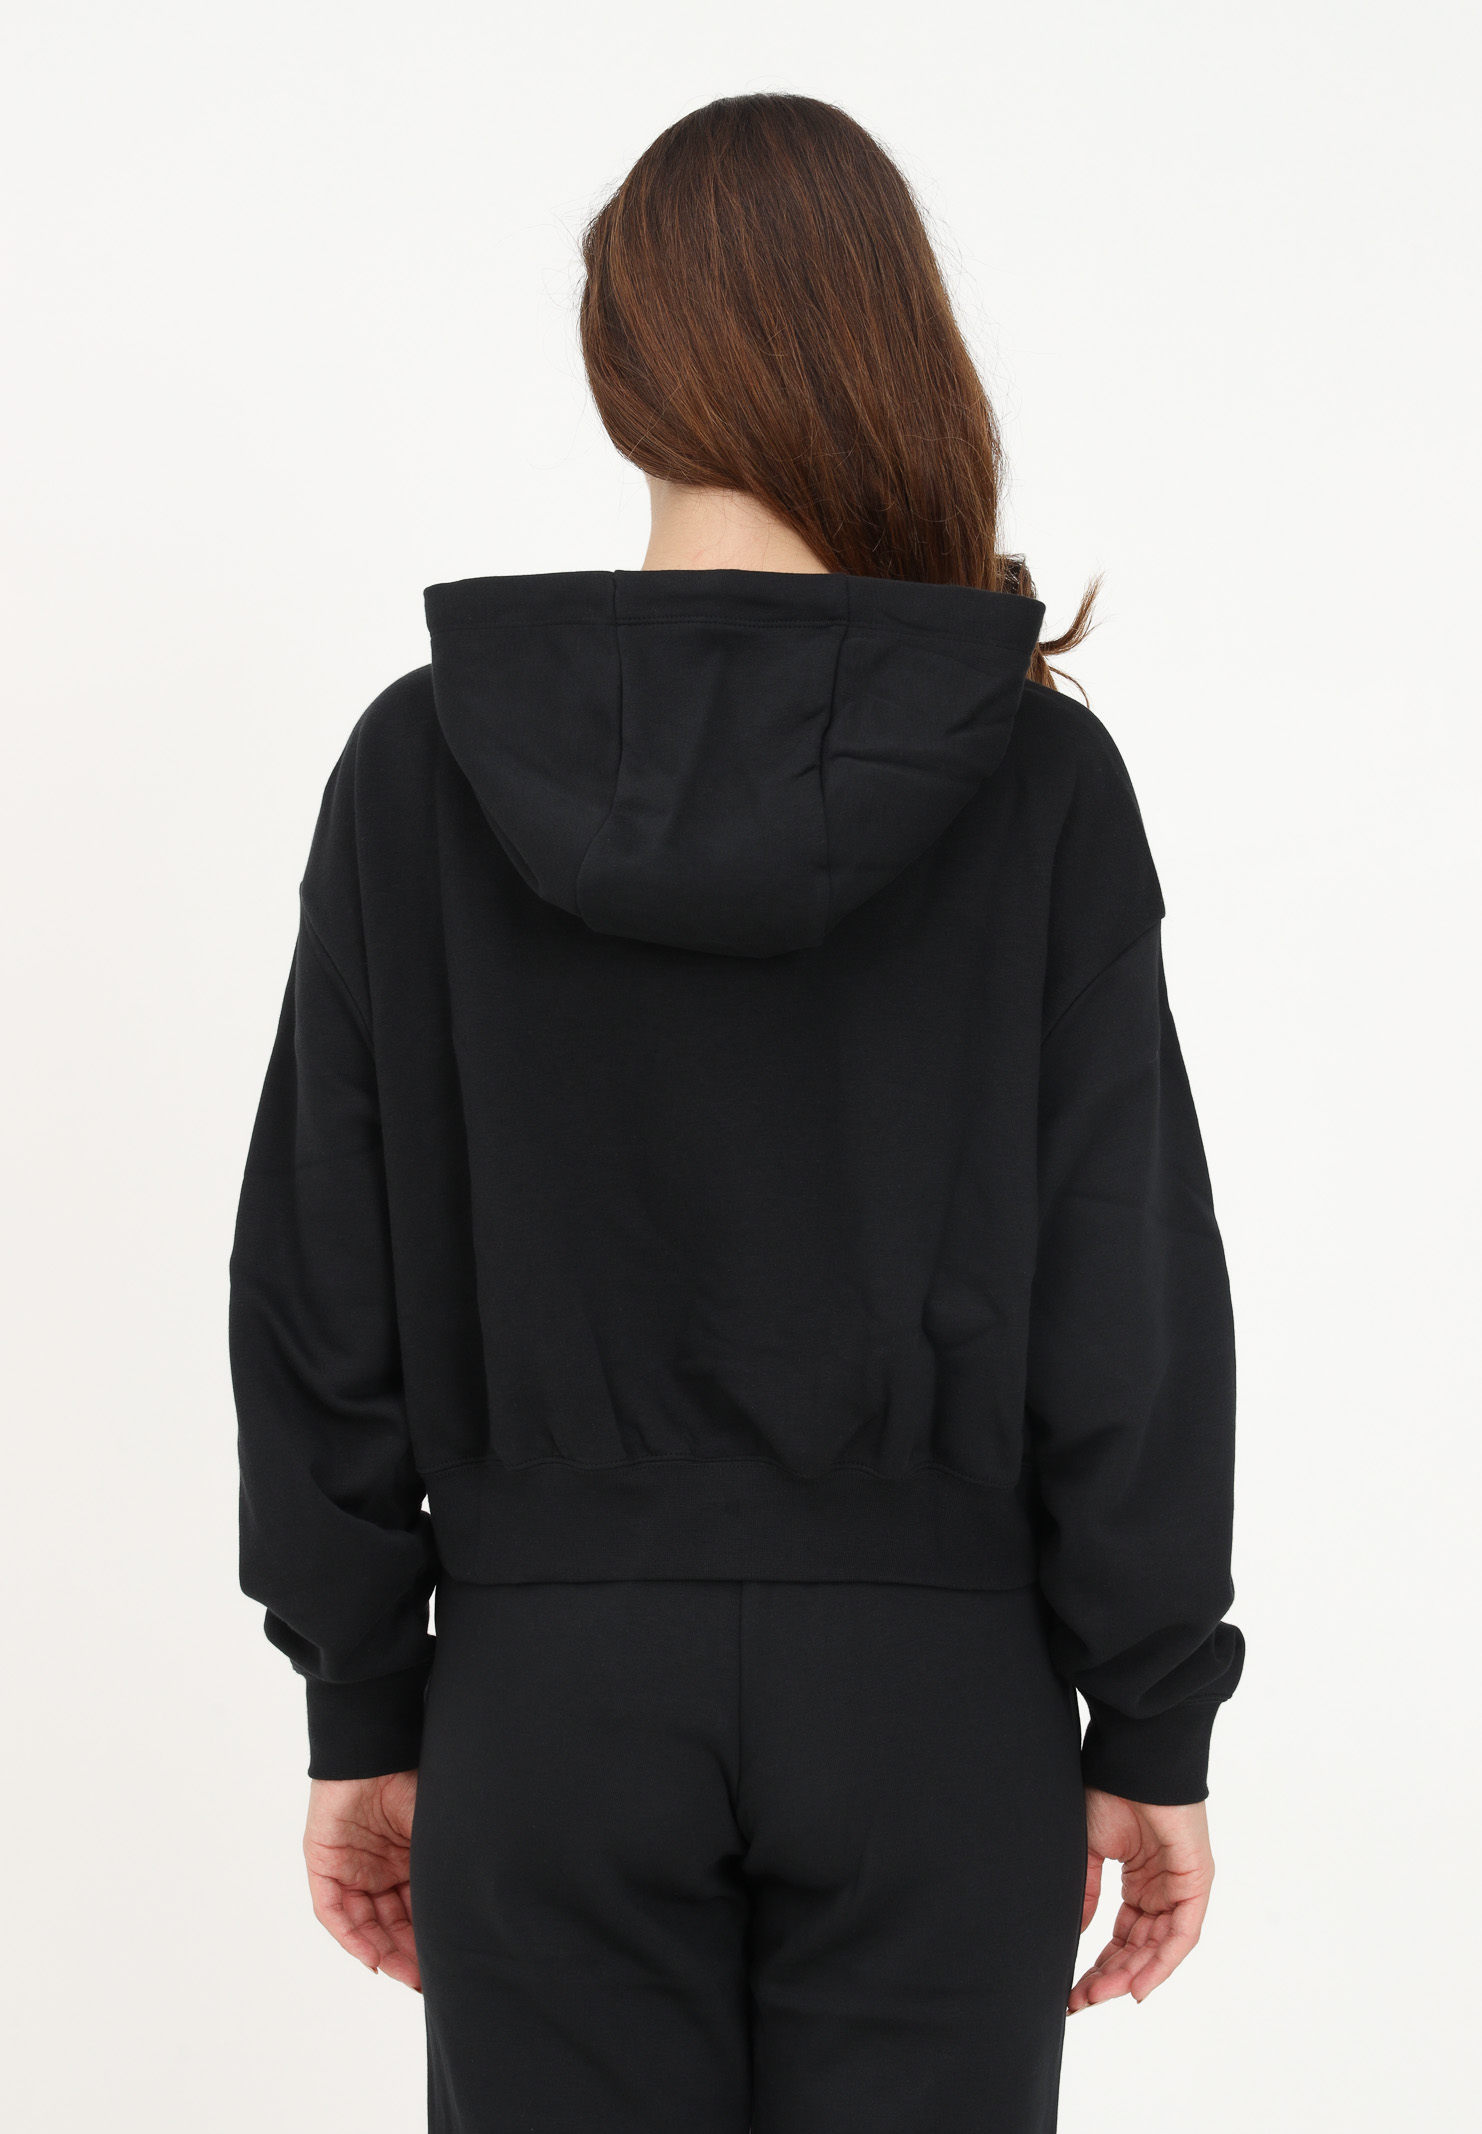 Hooded sweatshirt with logo print NIKE | DQ5850010